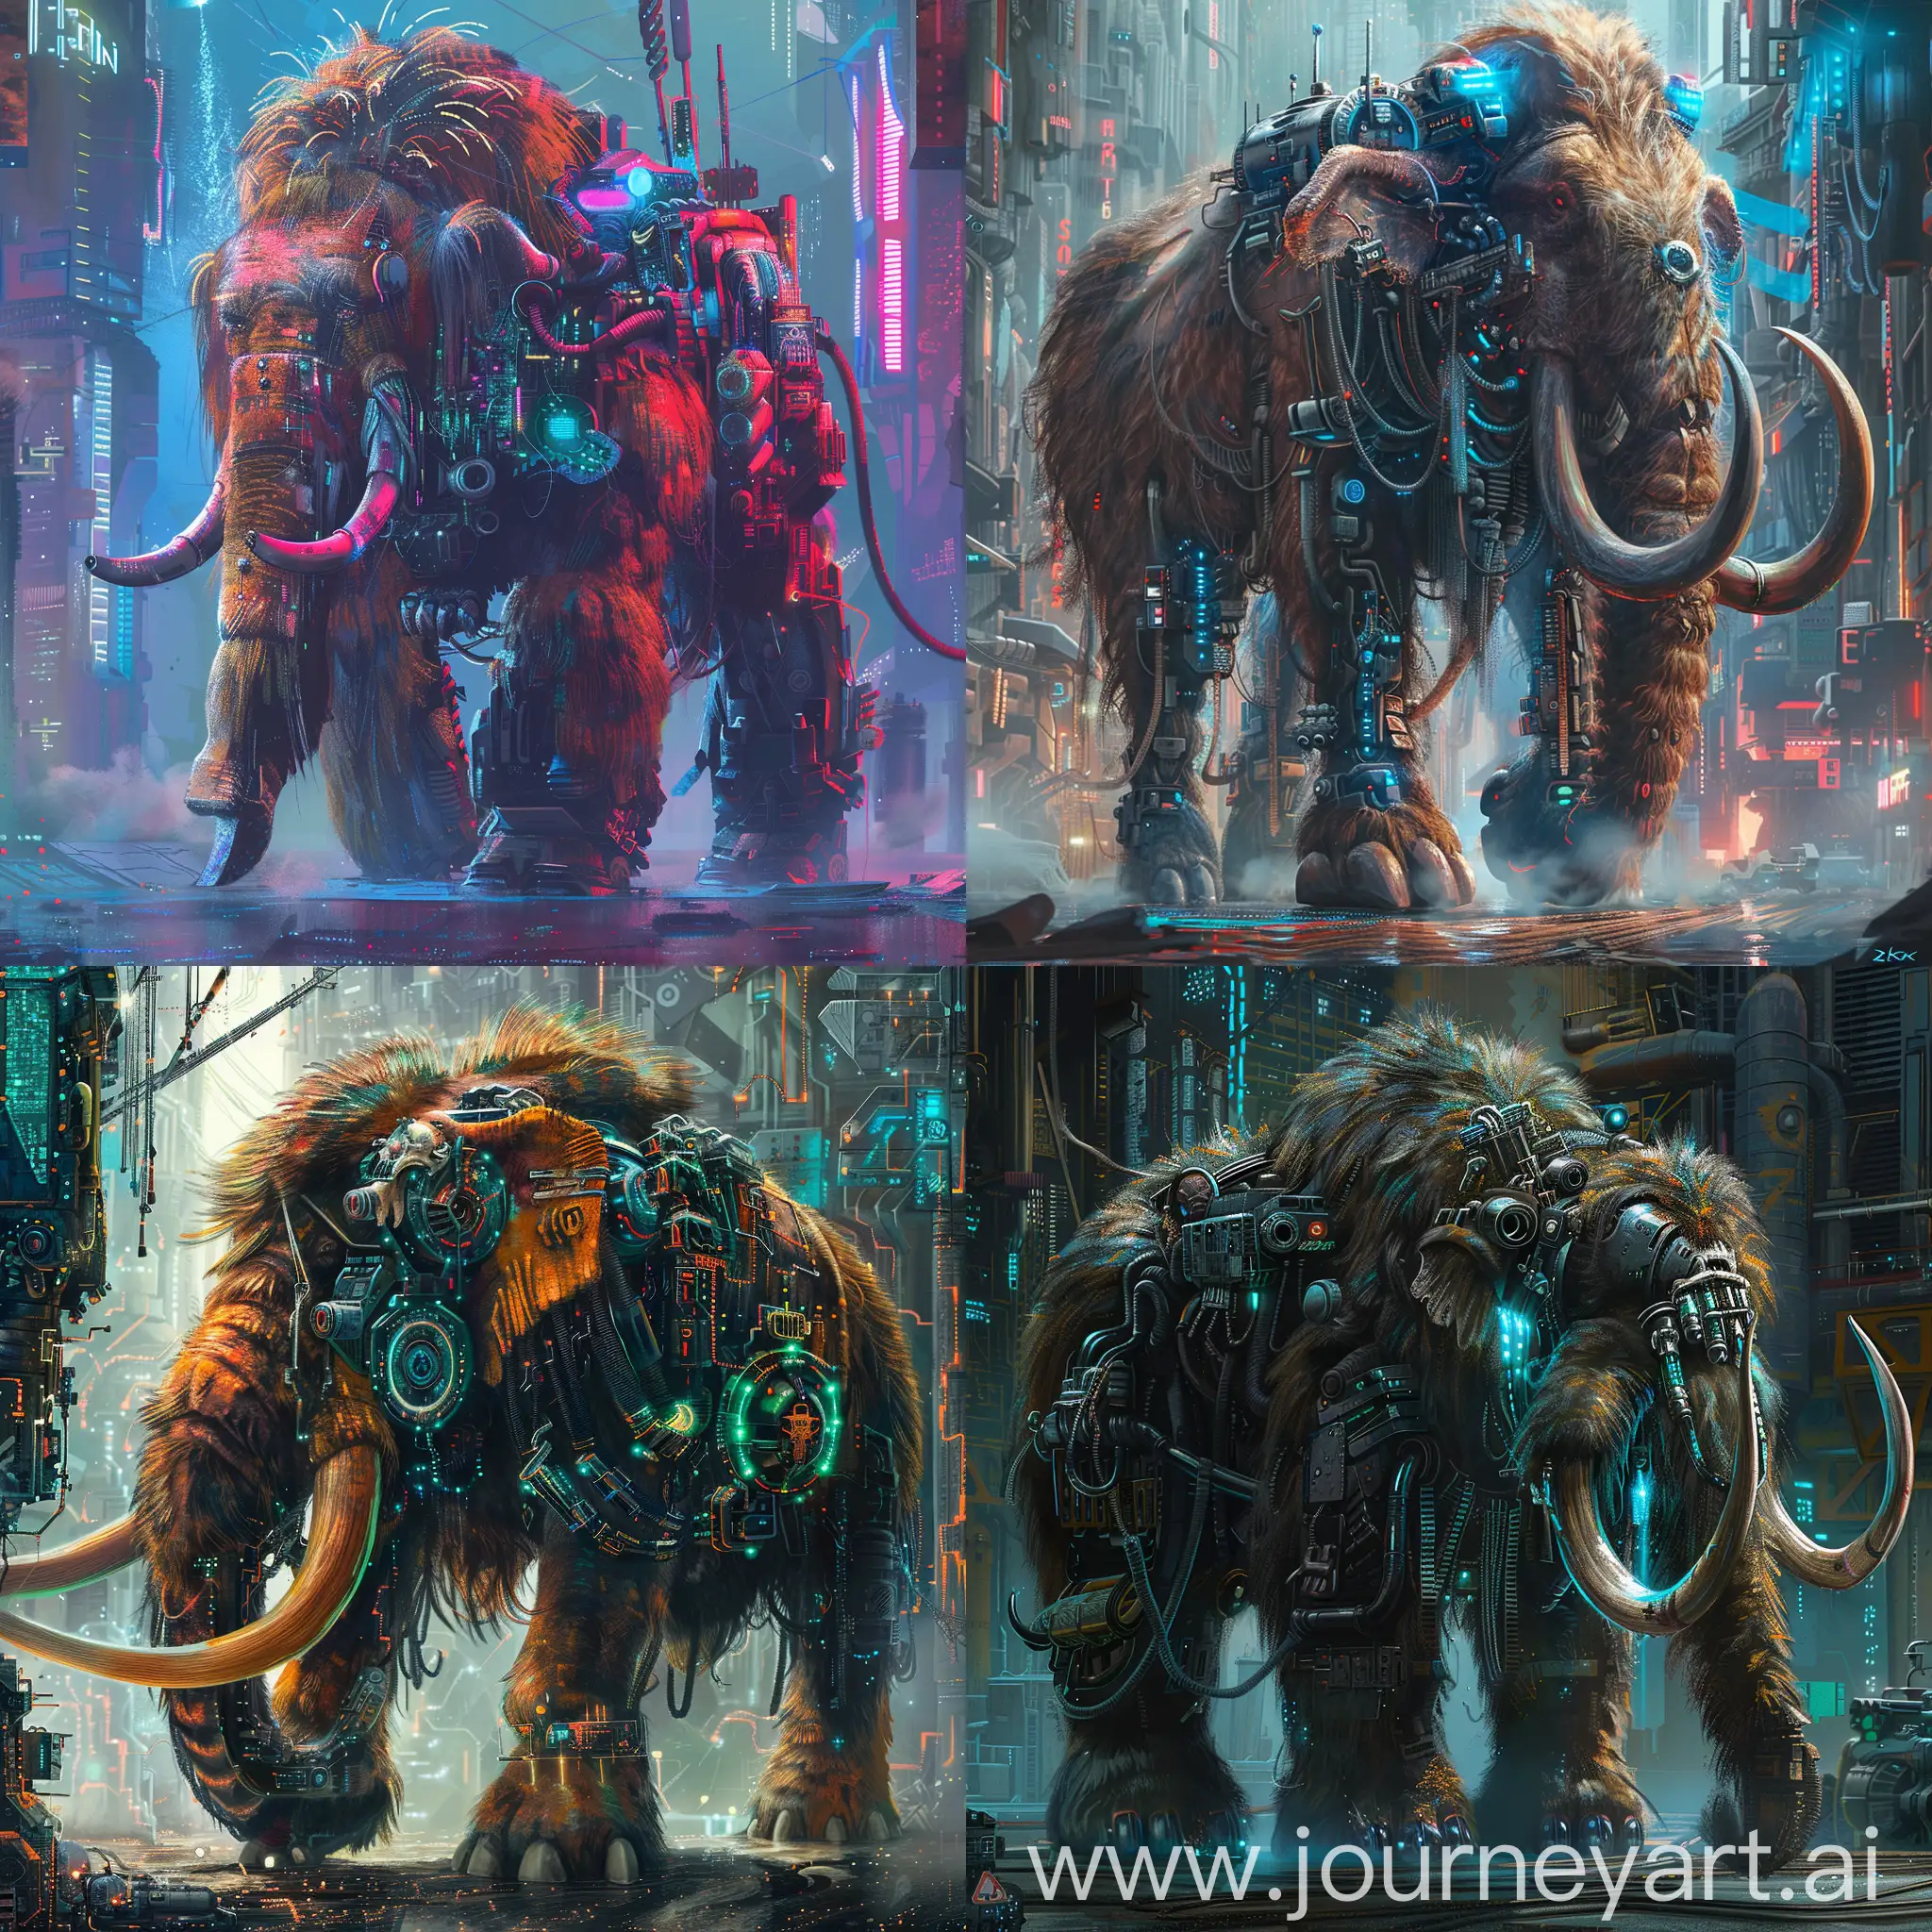 Futuristic-Cyberpunk-Mammoth-with-Intricate-Technological-Elements